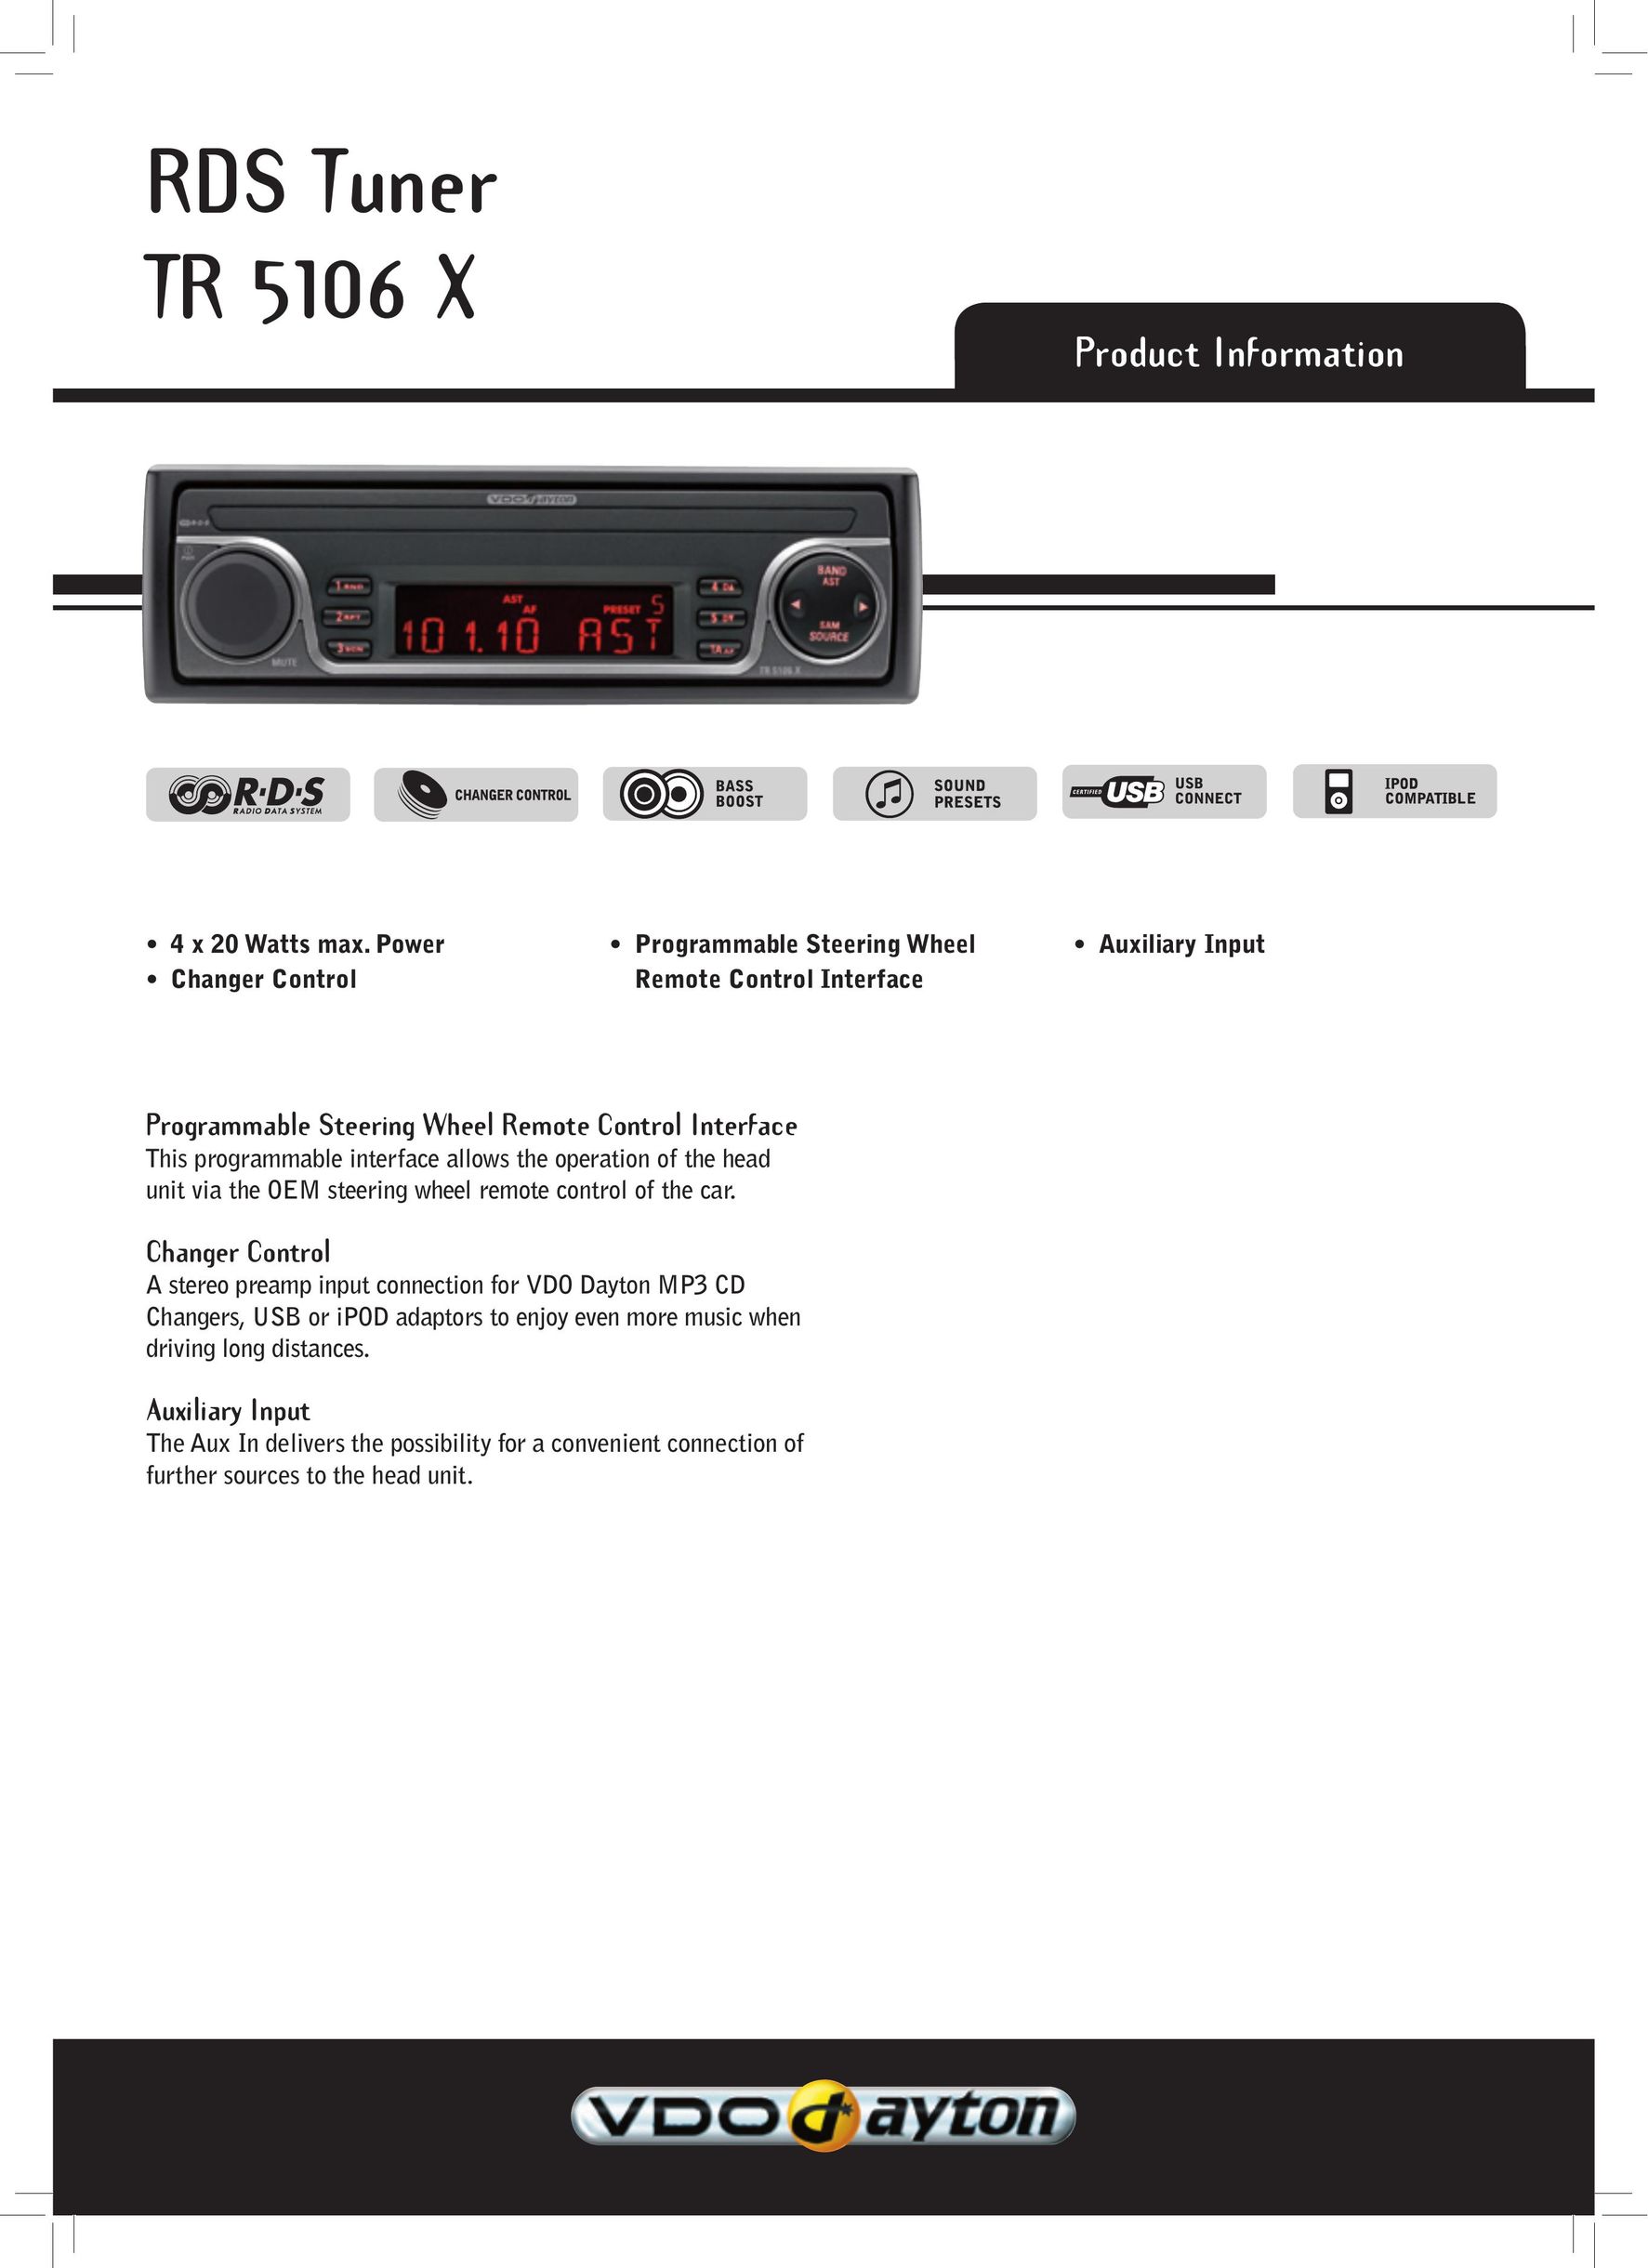 VDO Dayton TR 5106 X CD Player User Manual